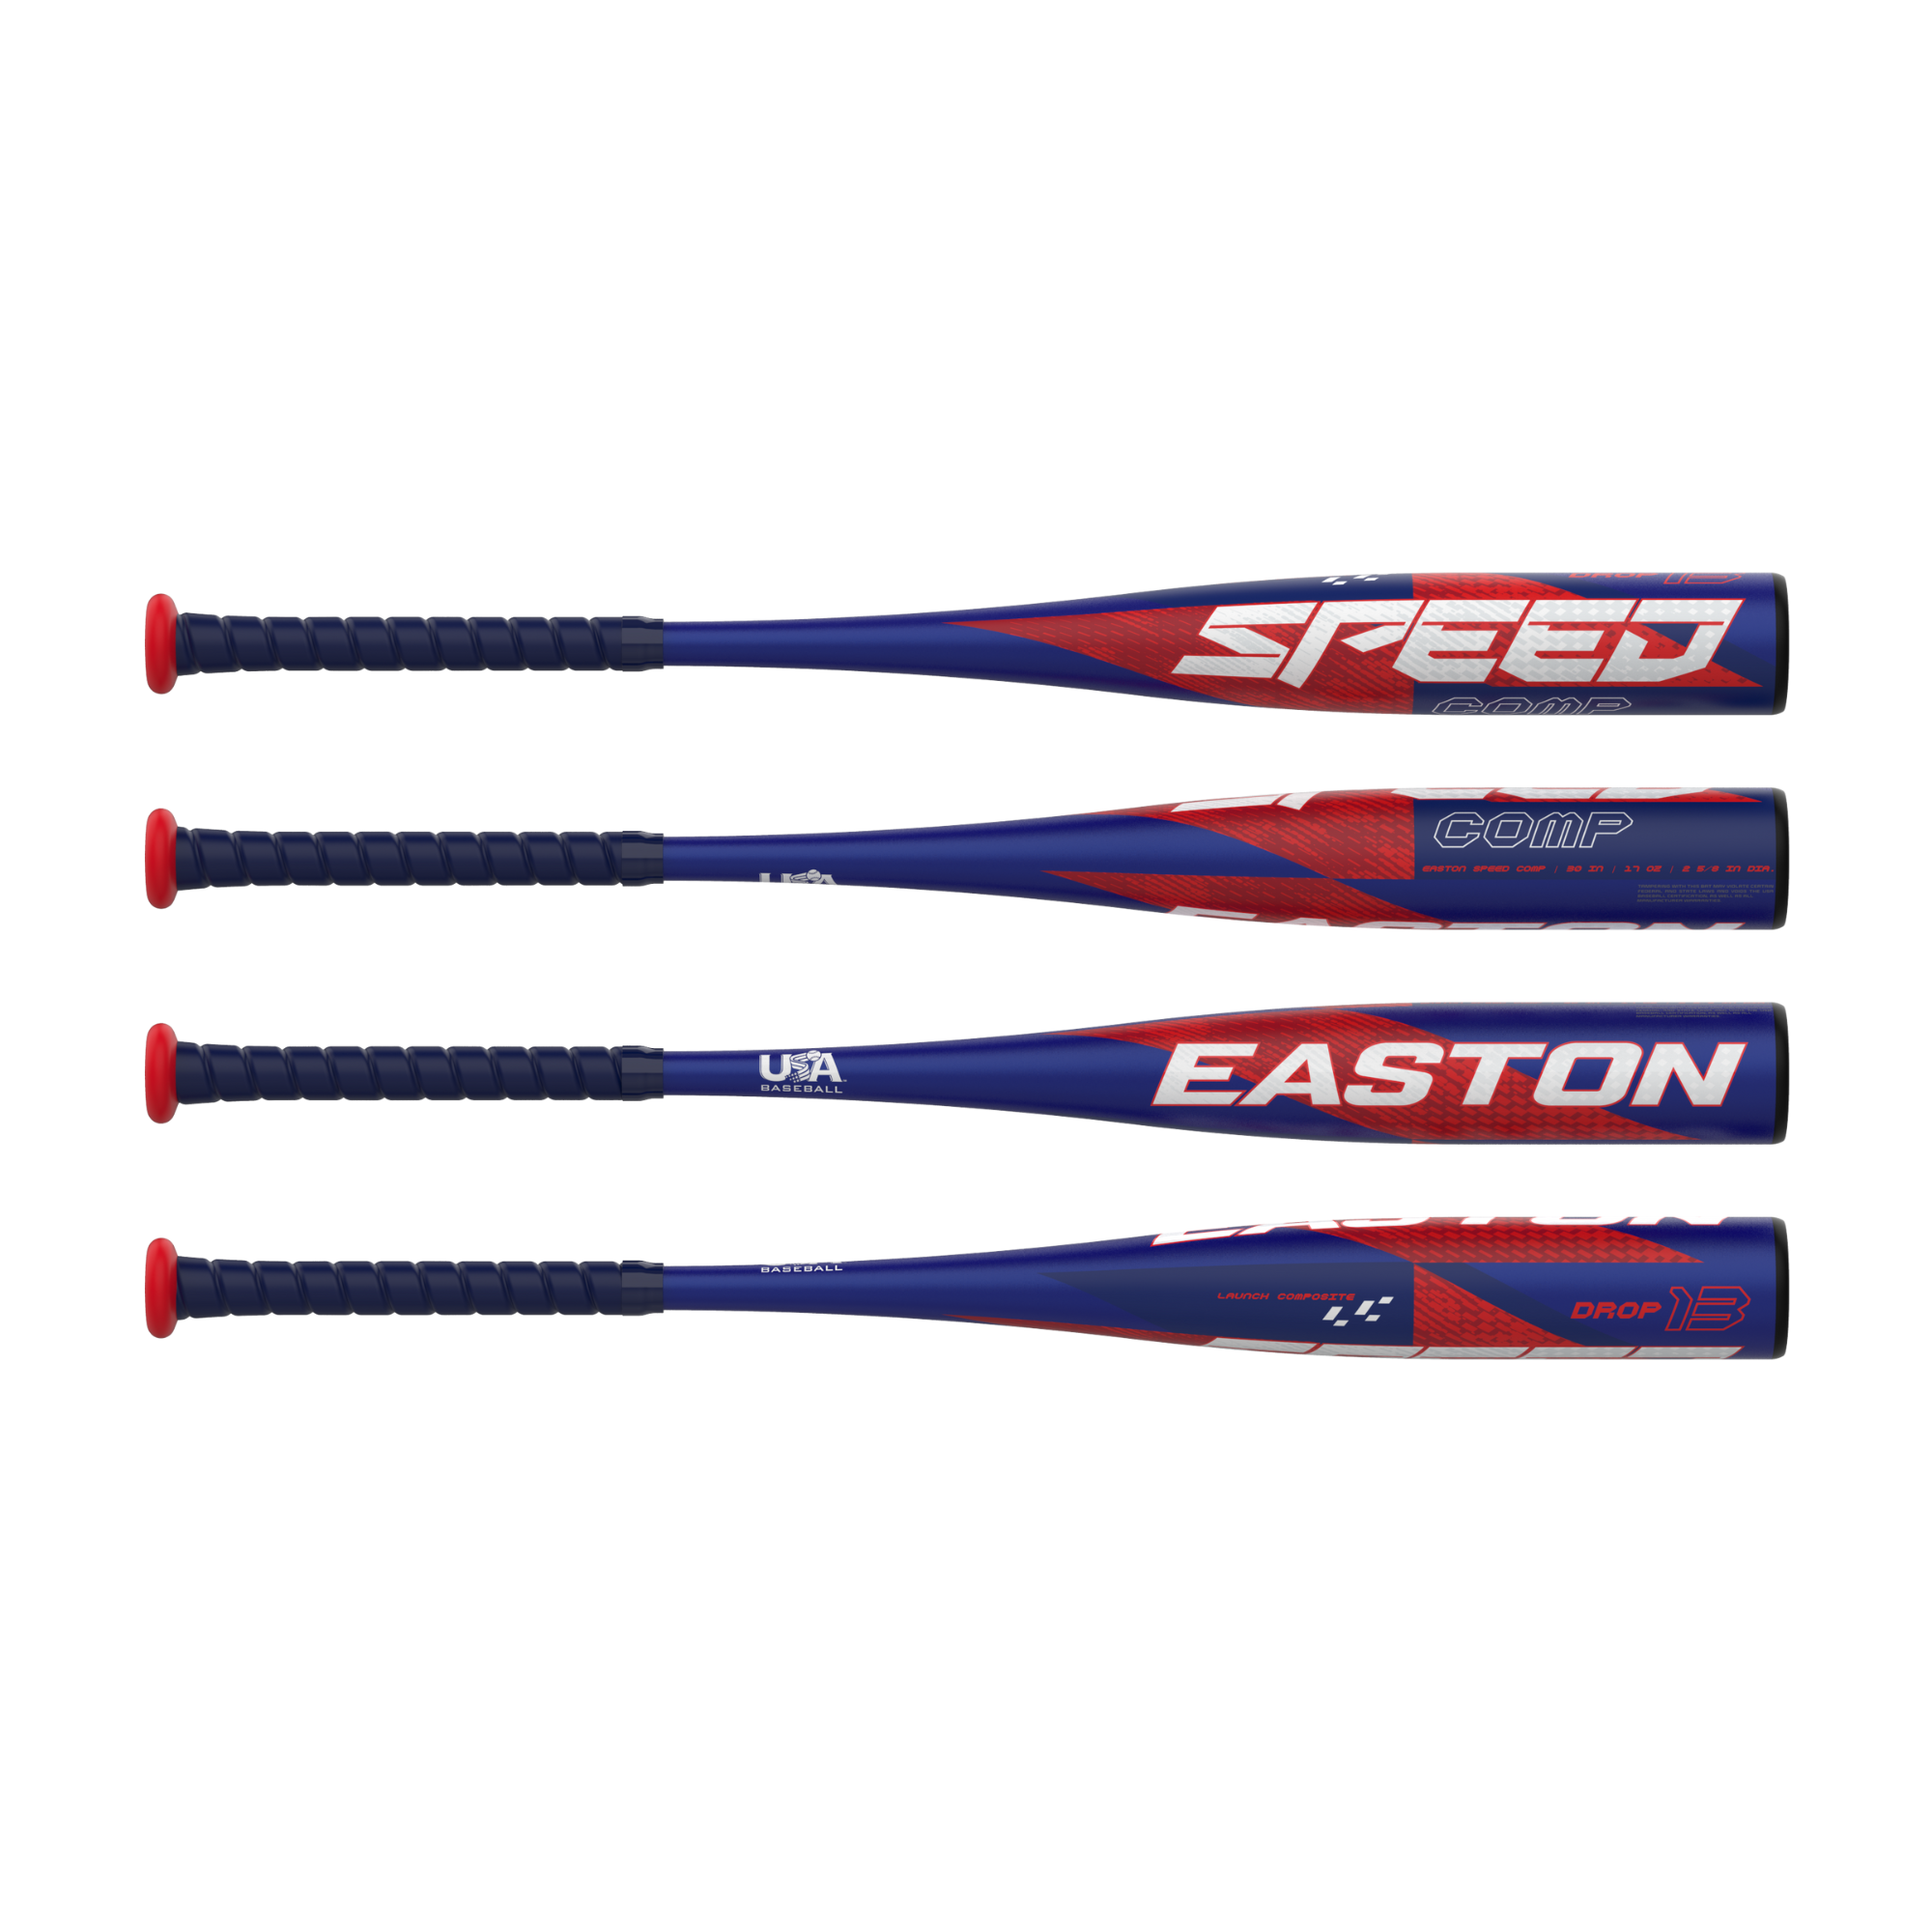 Easton Speed Comp -13 USA Baseball Bat